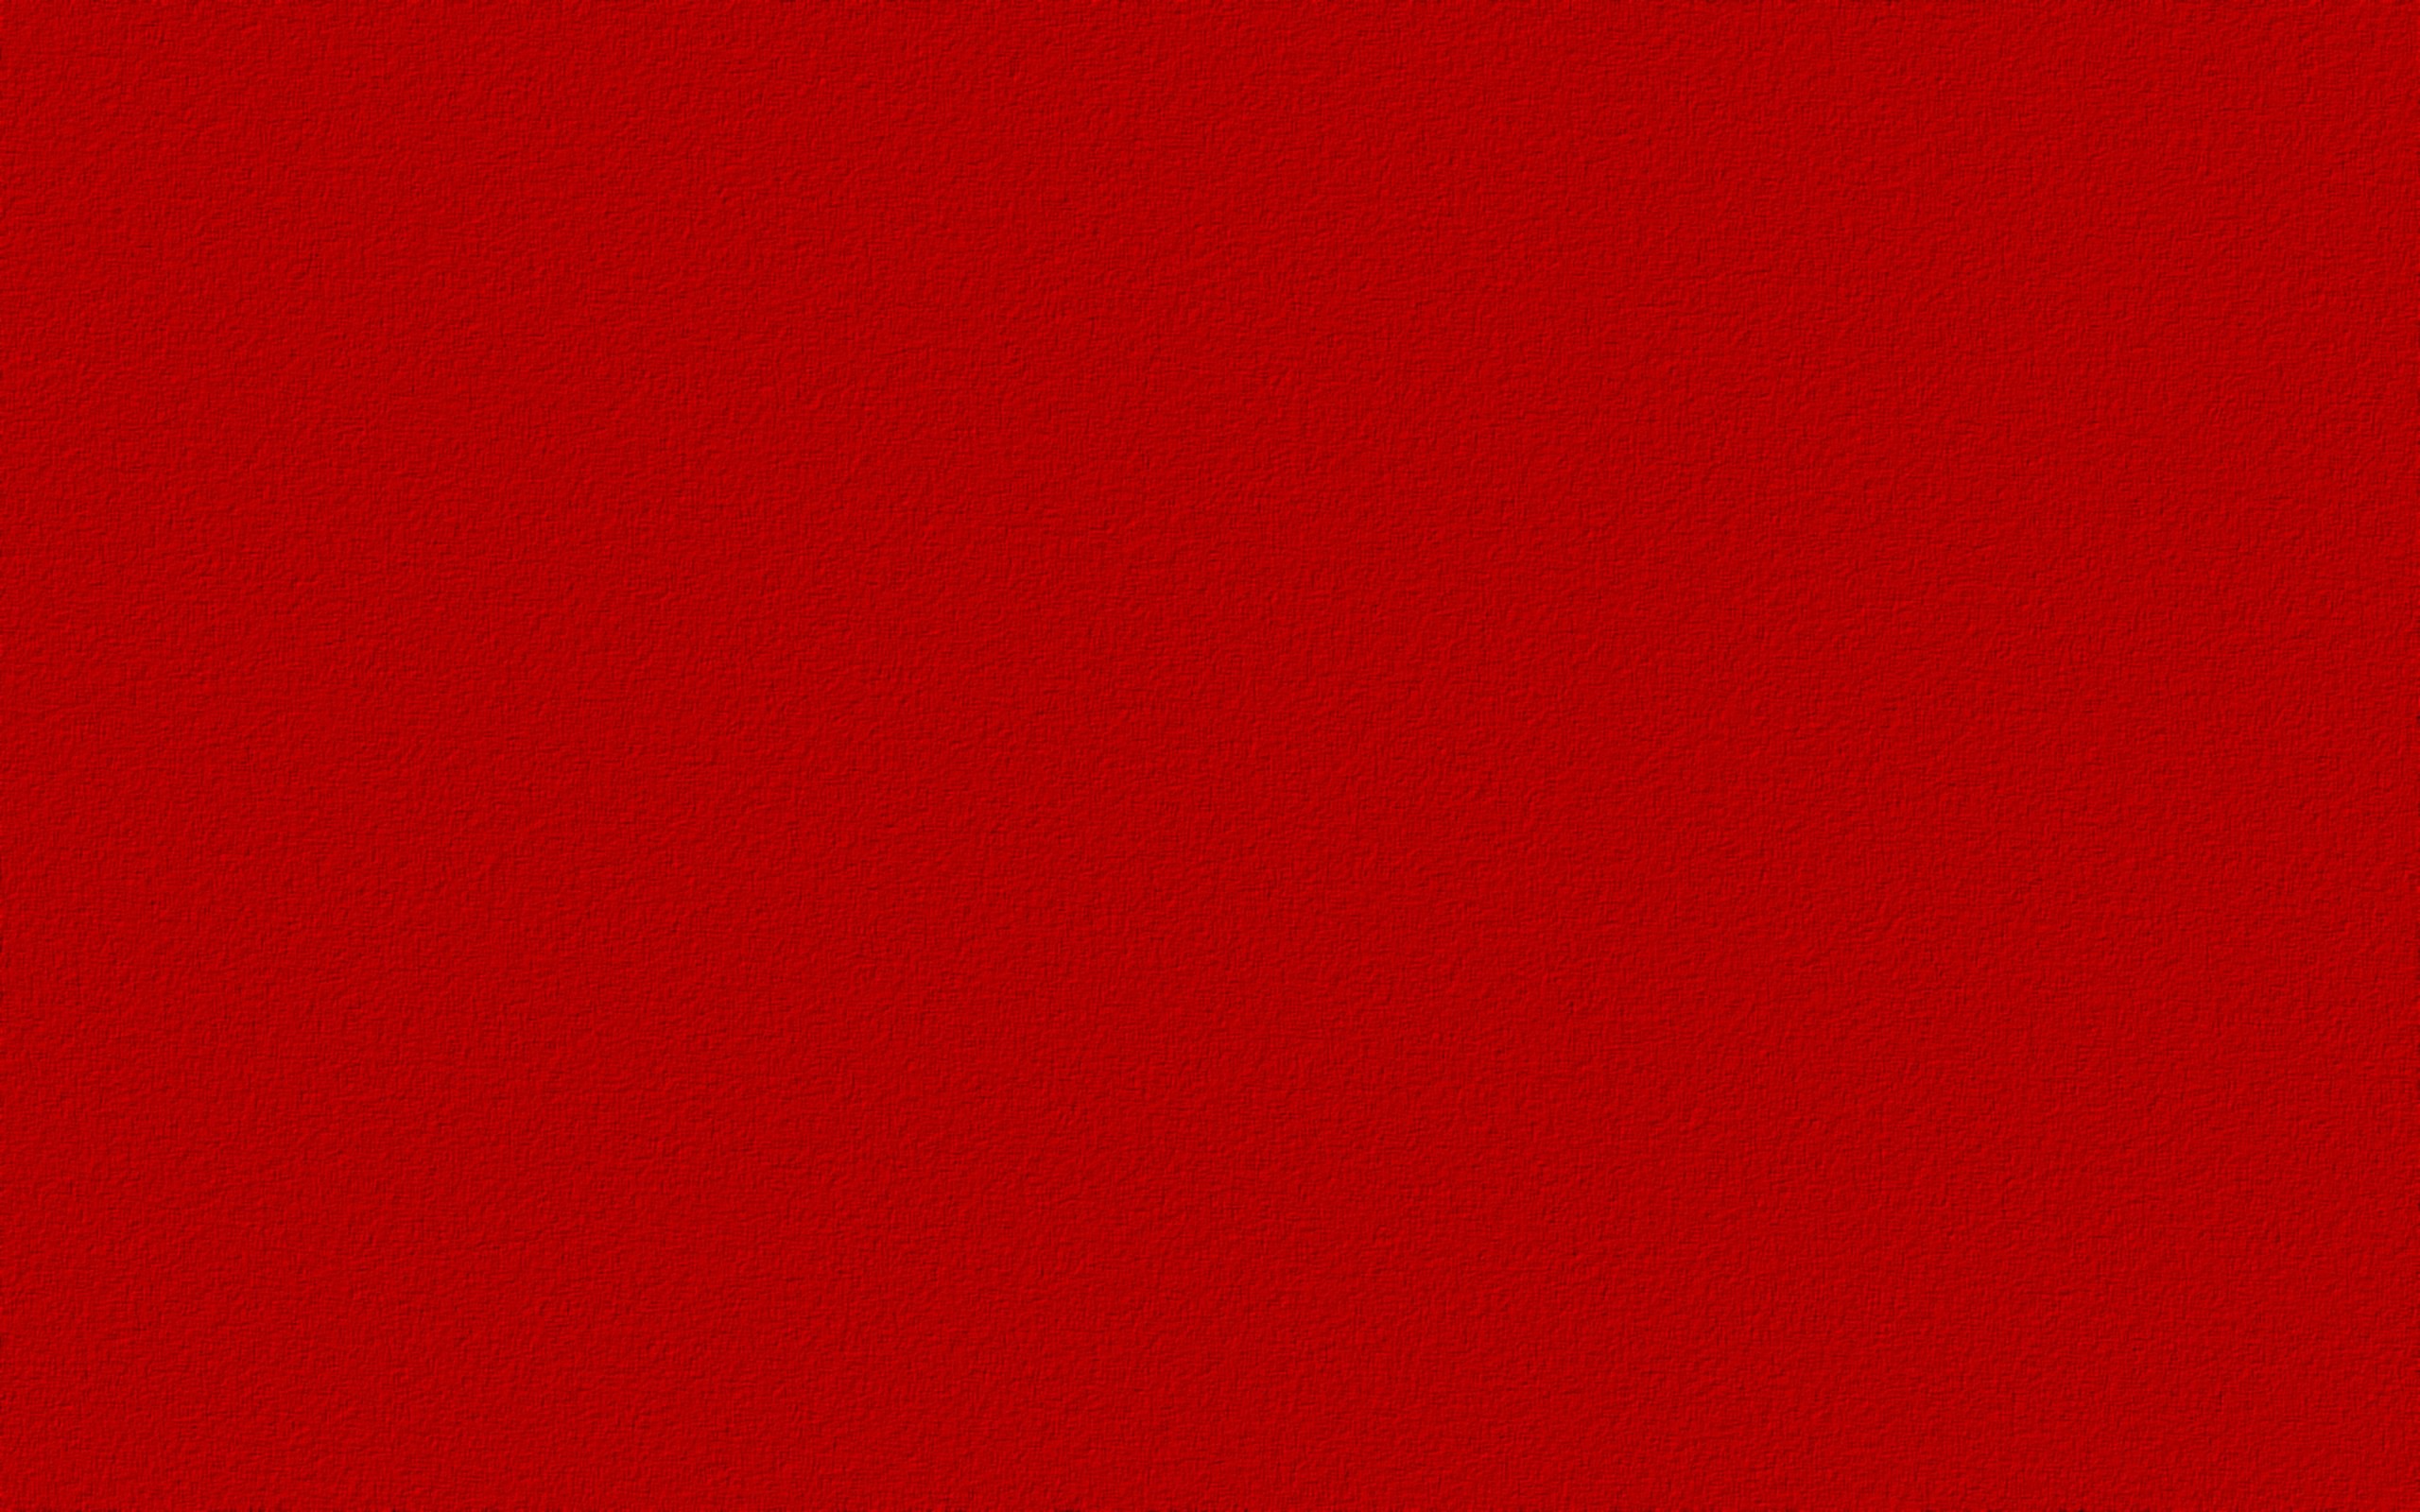 2560x1600 Red 2142 2560 x 1600 - WallpaperLayer.com